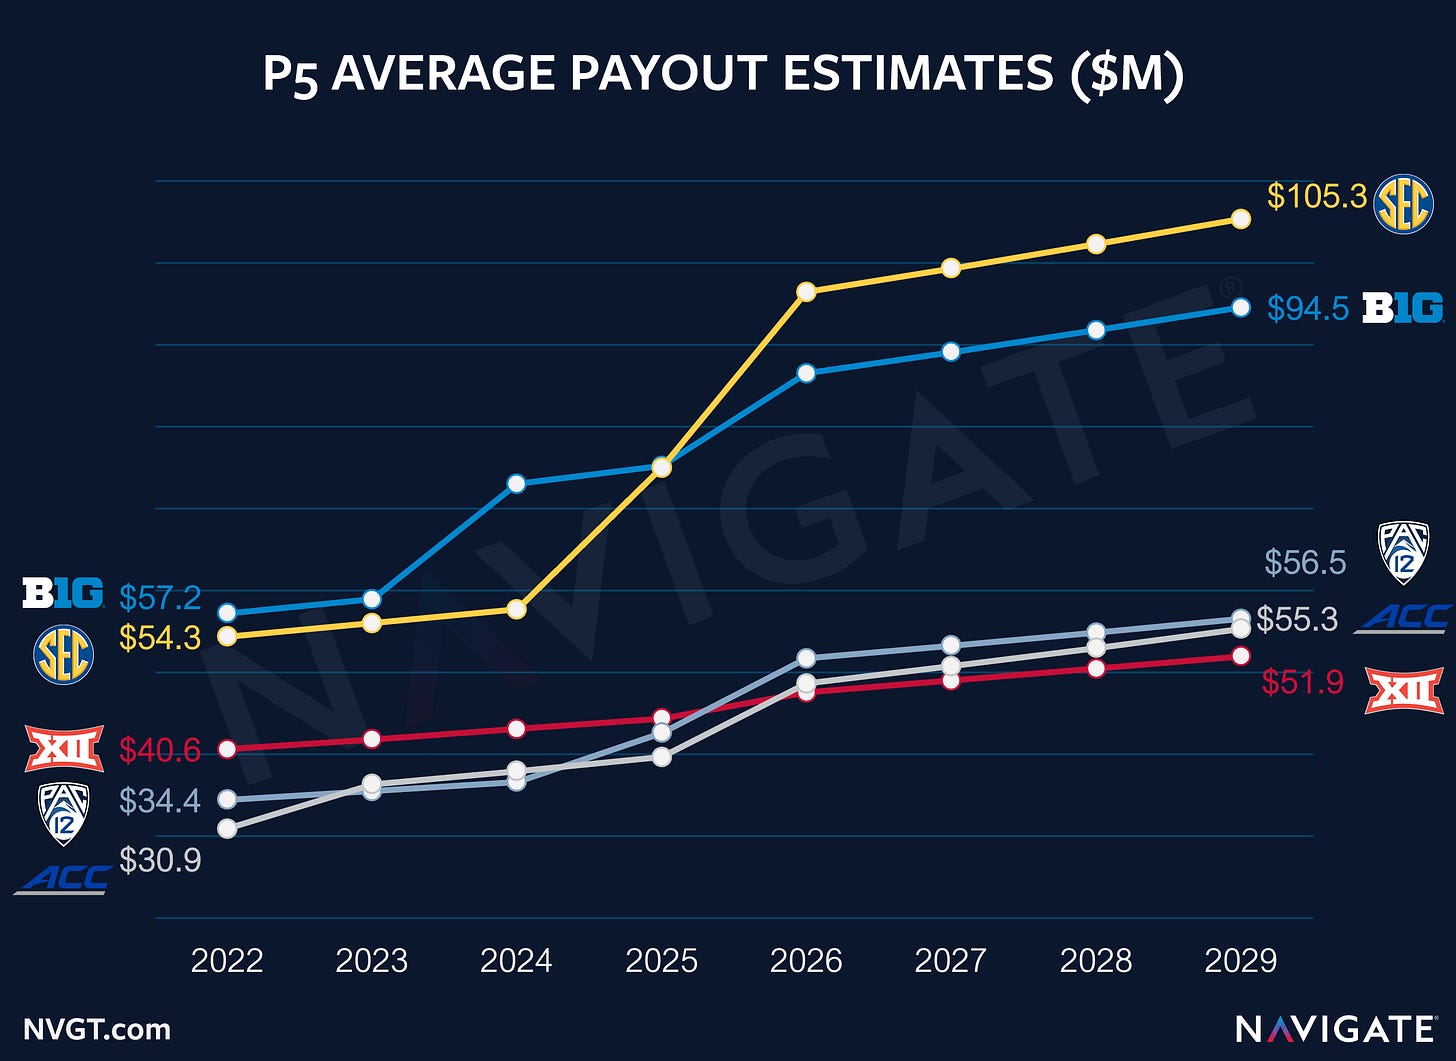 Power 5 Conference Payout Estimates | Navigate